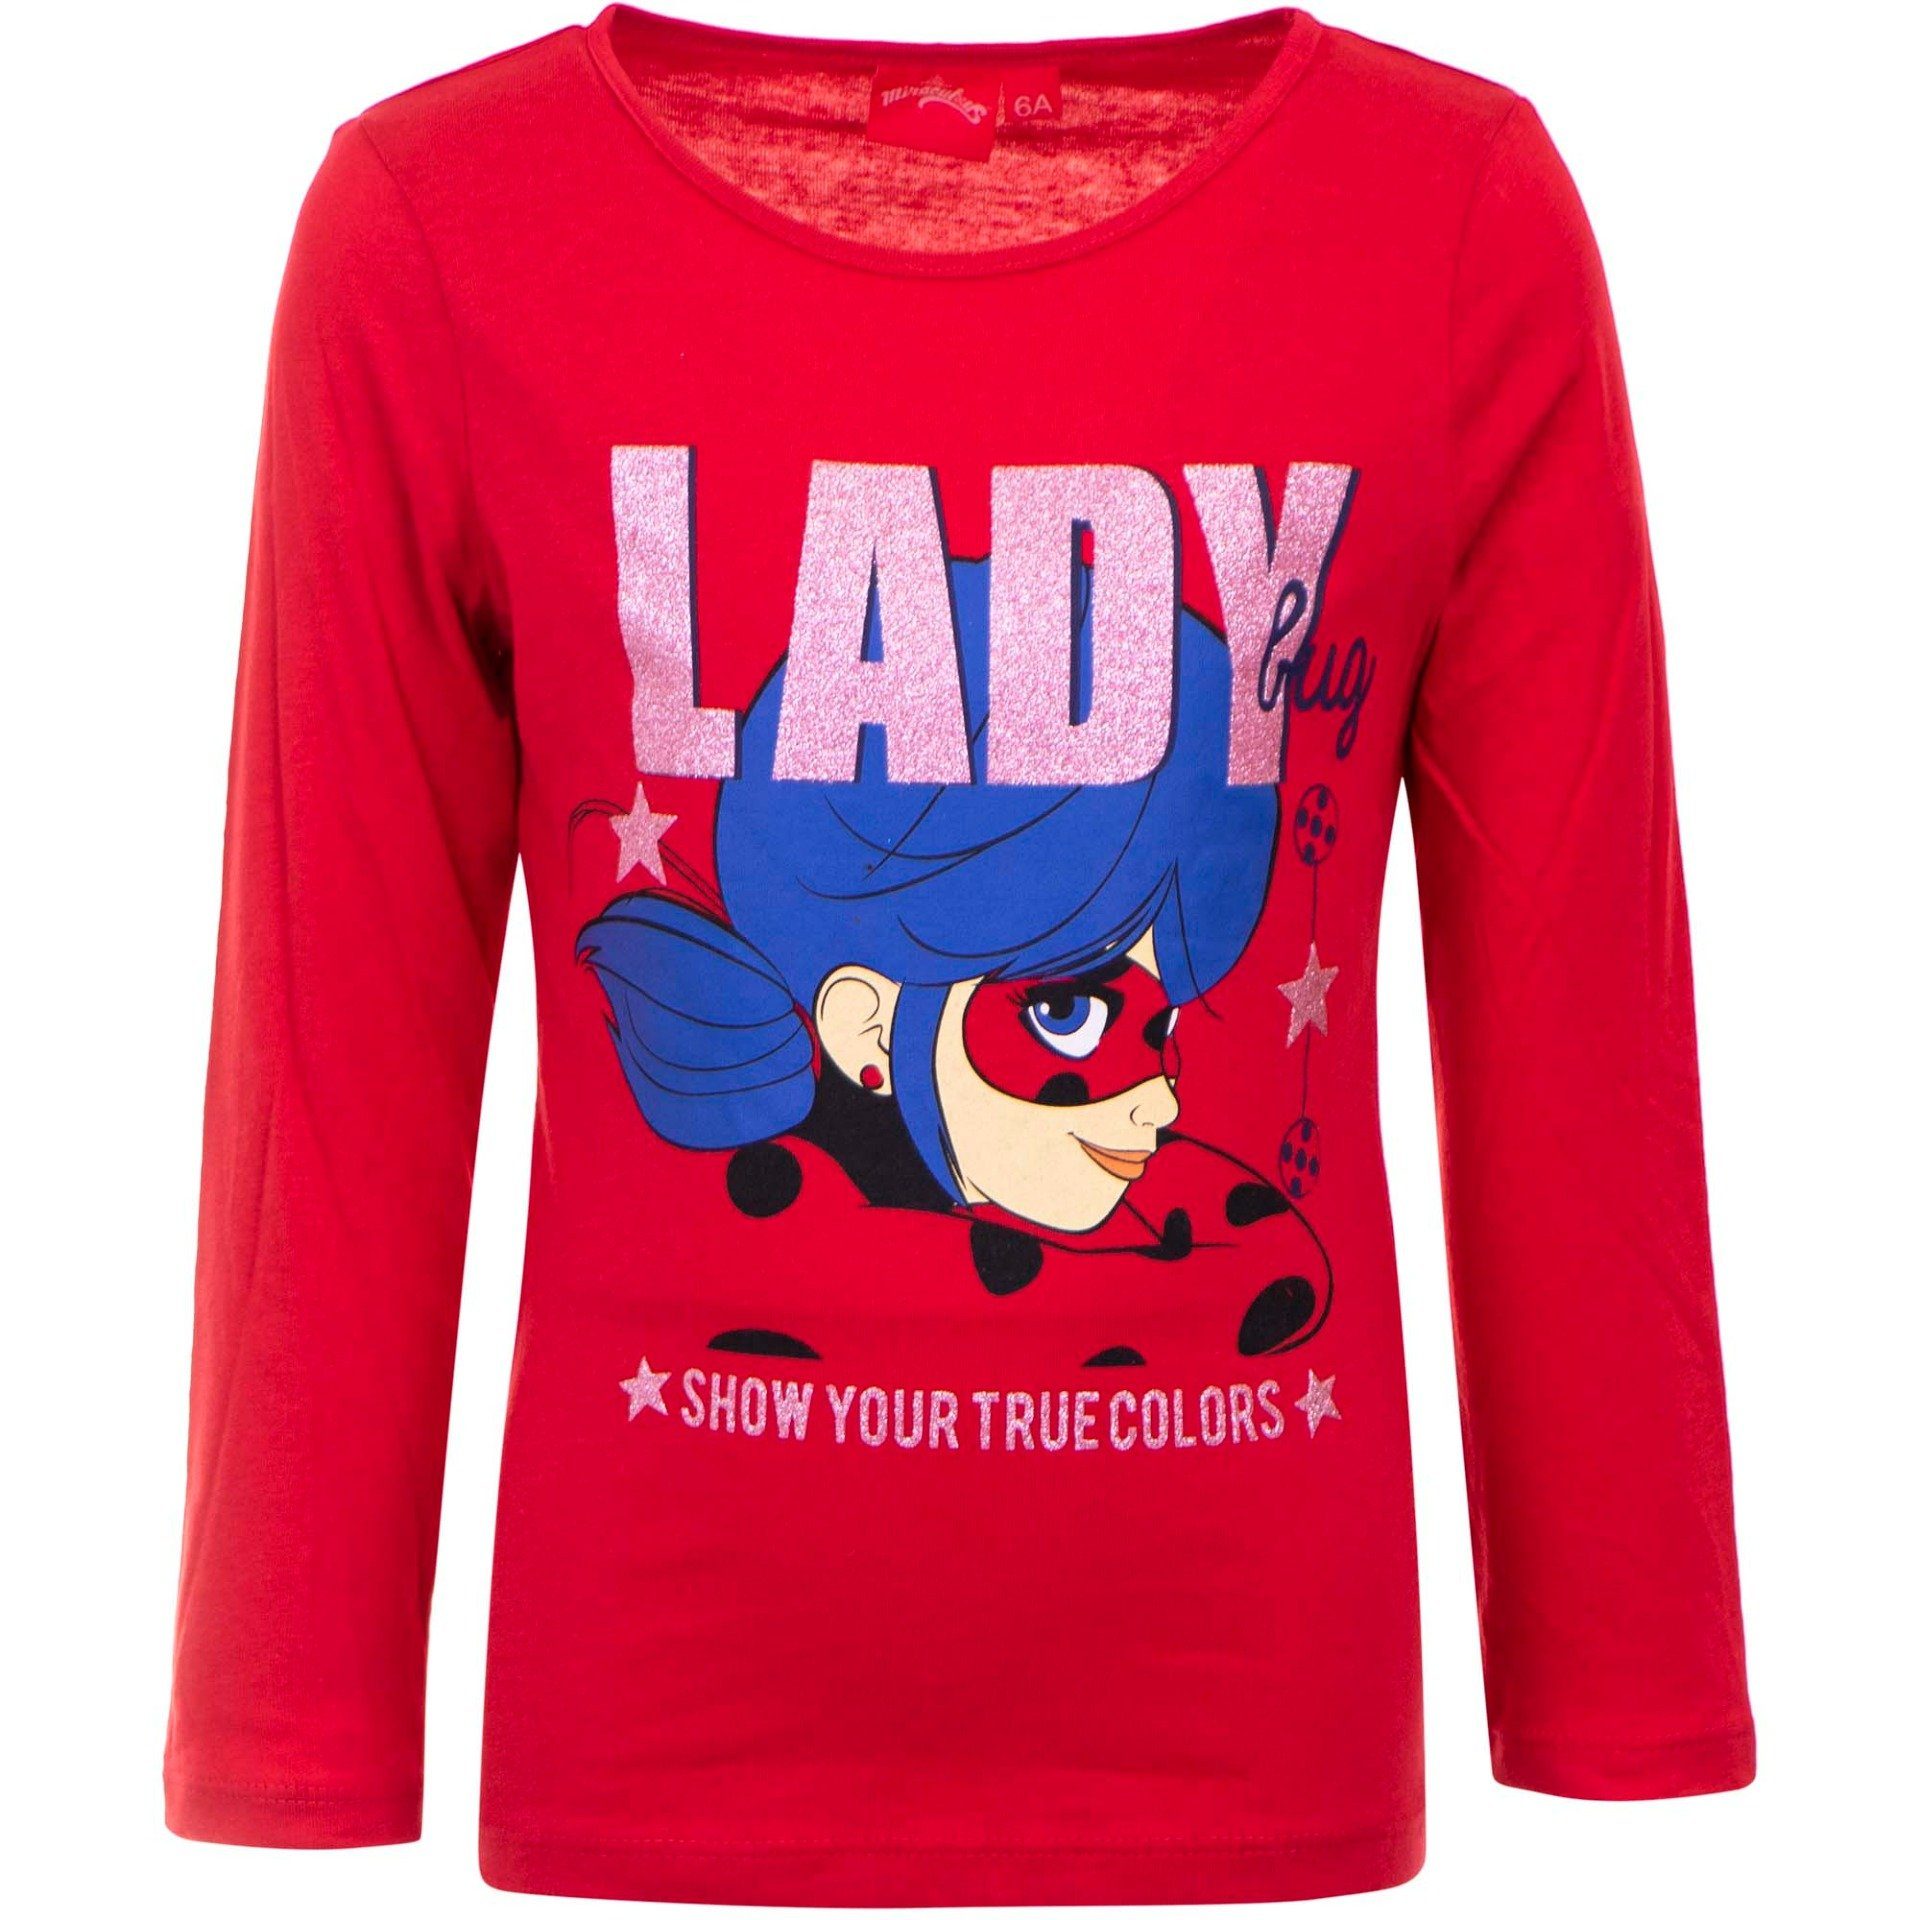 Miraculous - Ladybug Langarmshirt Mädchen Shirt Gr. 104 bis 128, 100% Baumwolle, in Rot oder Grau